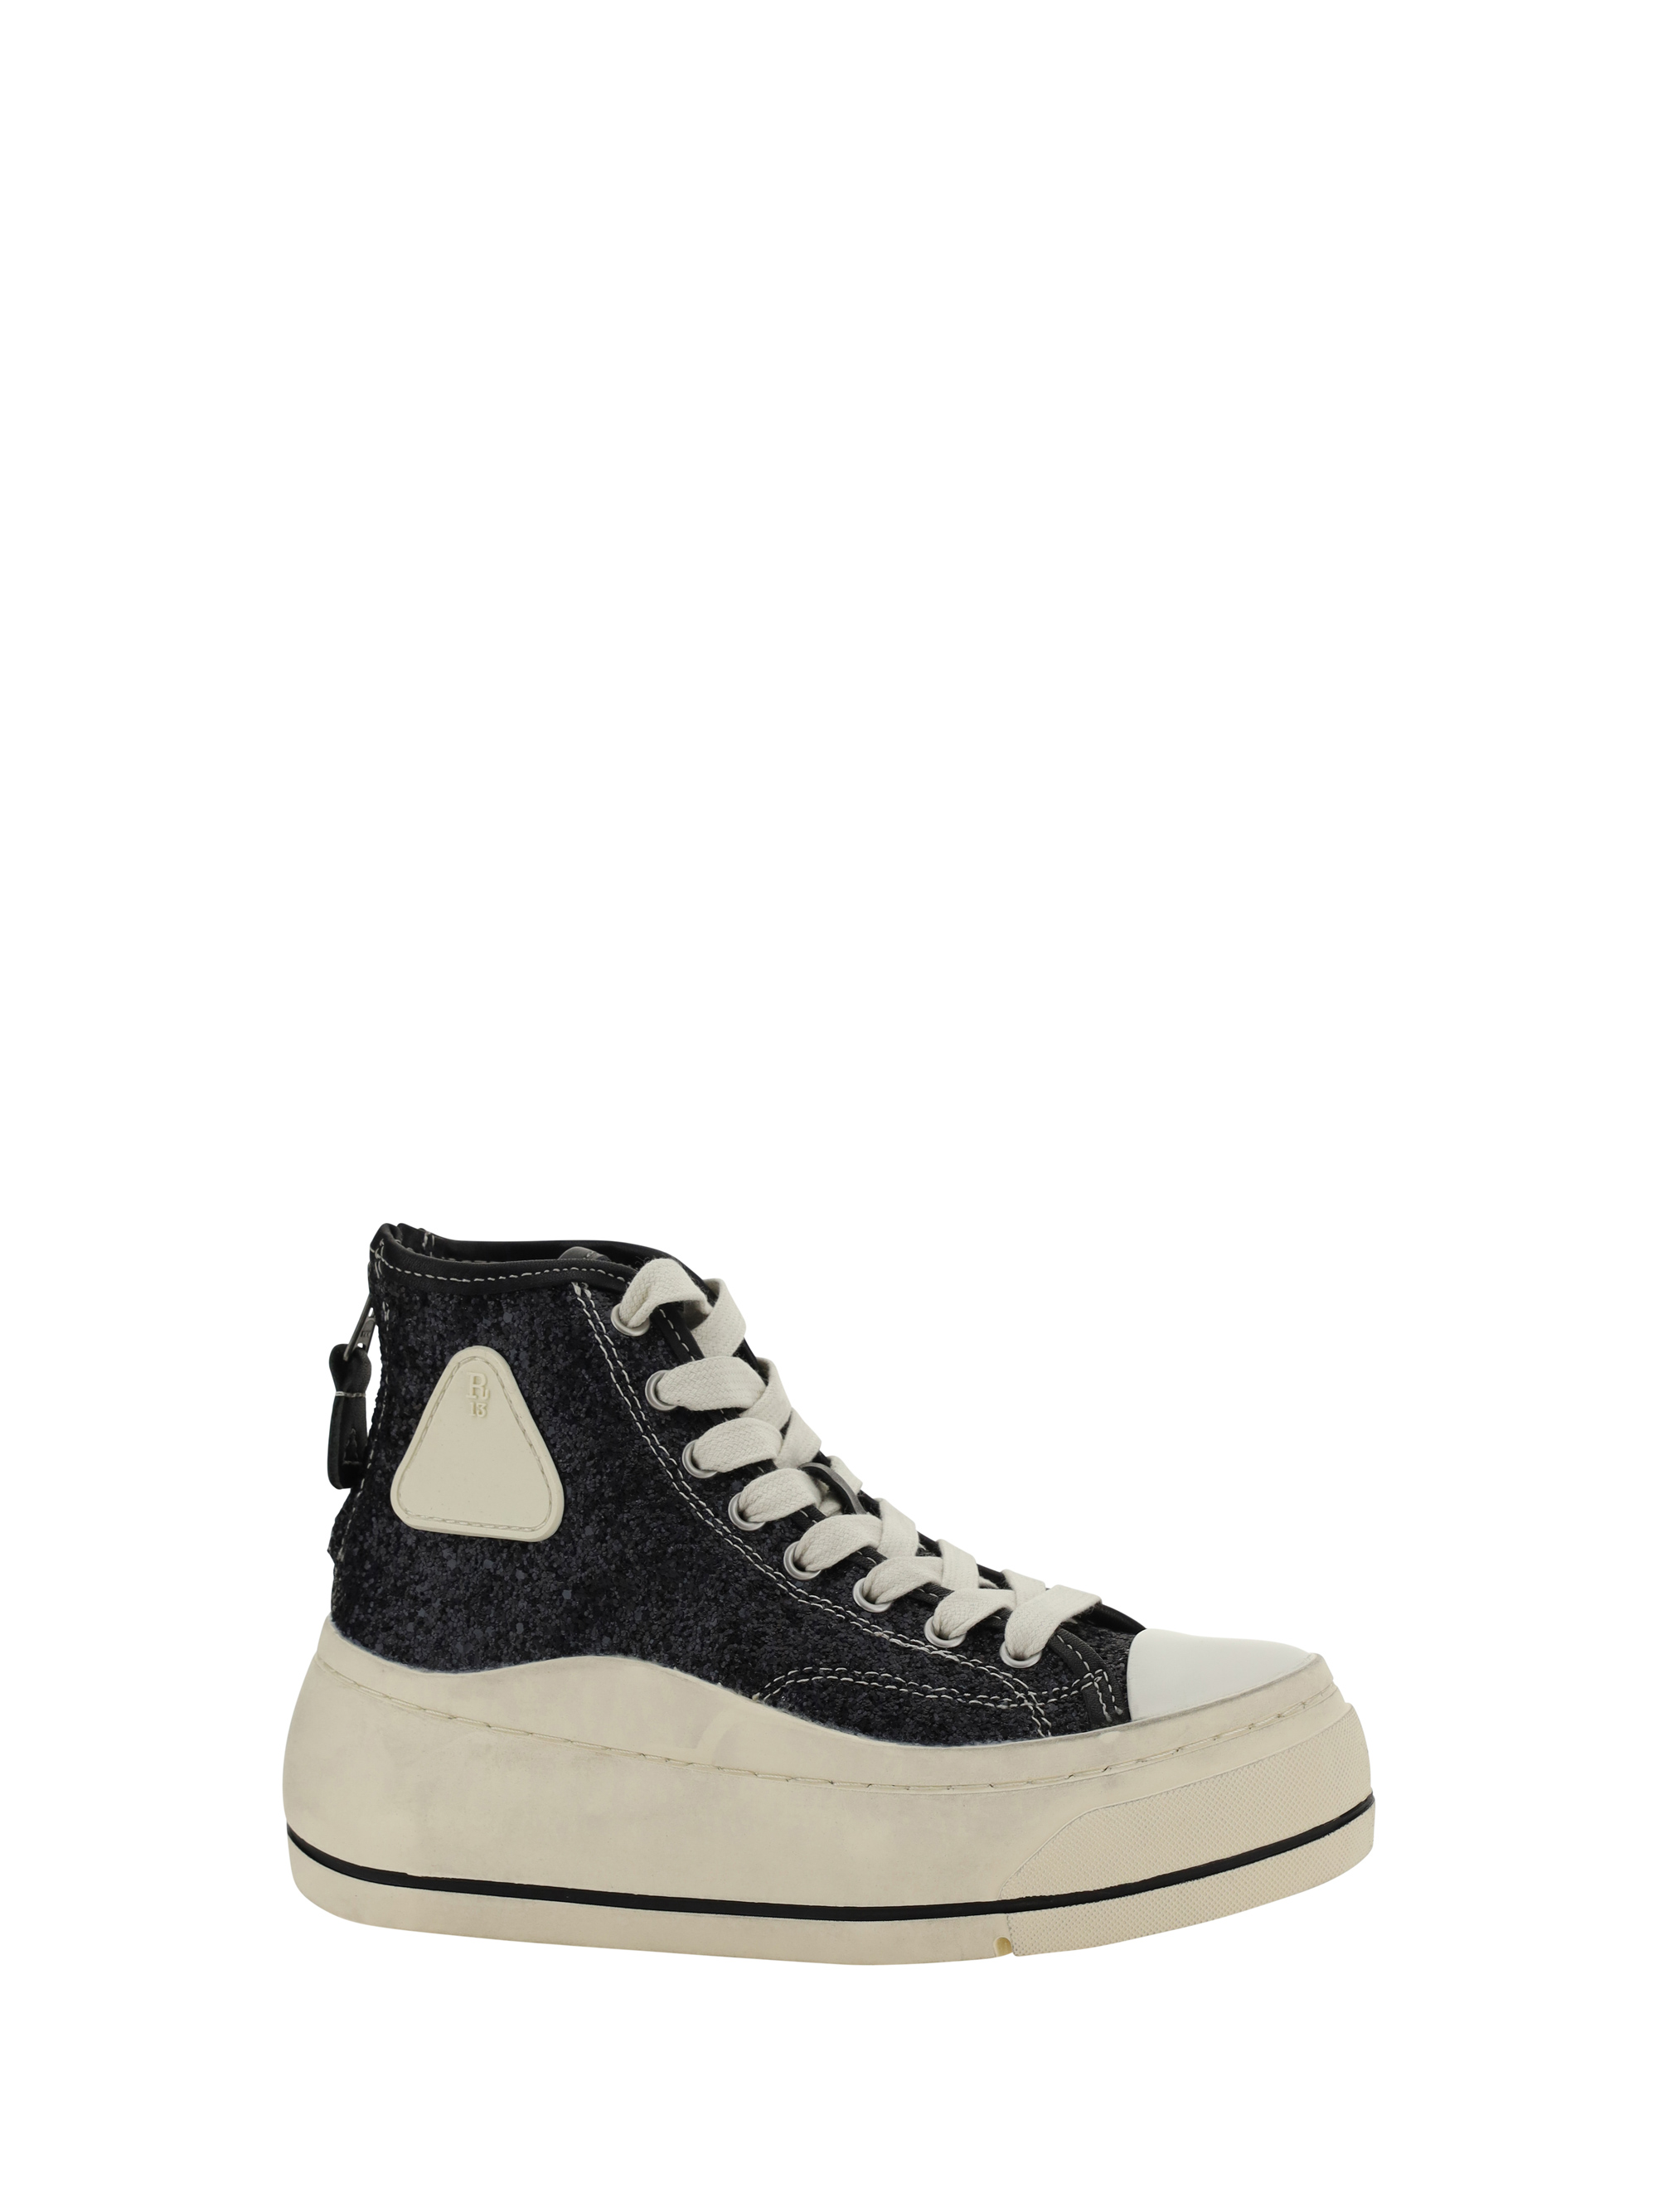 R13 Black & White Kurt Sneakers In Black Sparkle